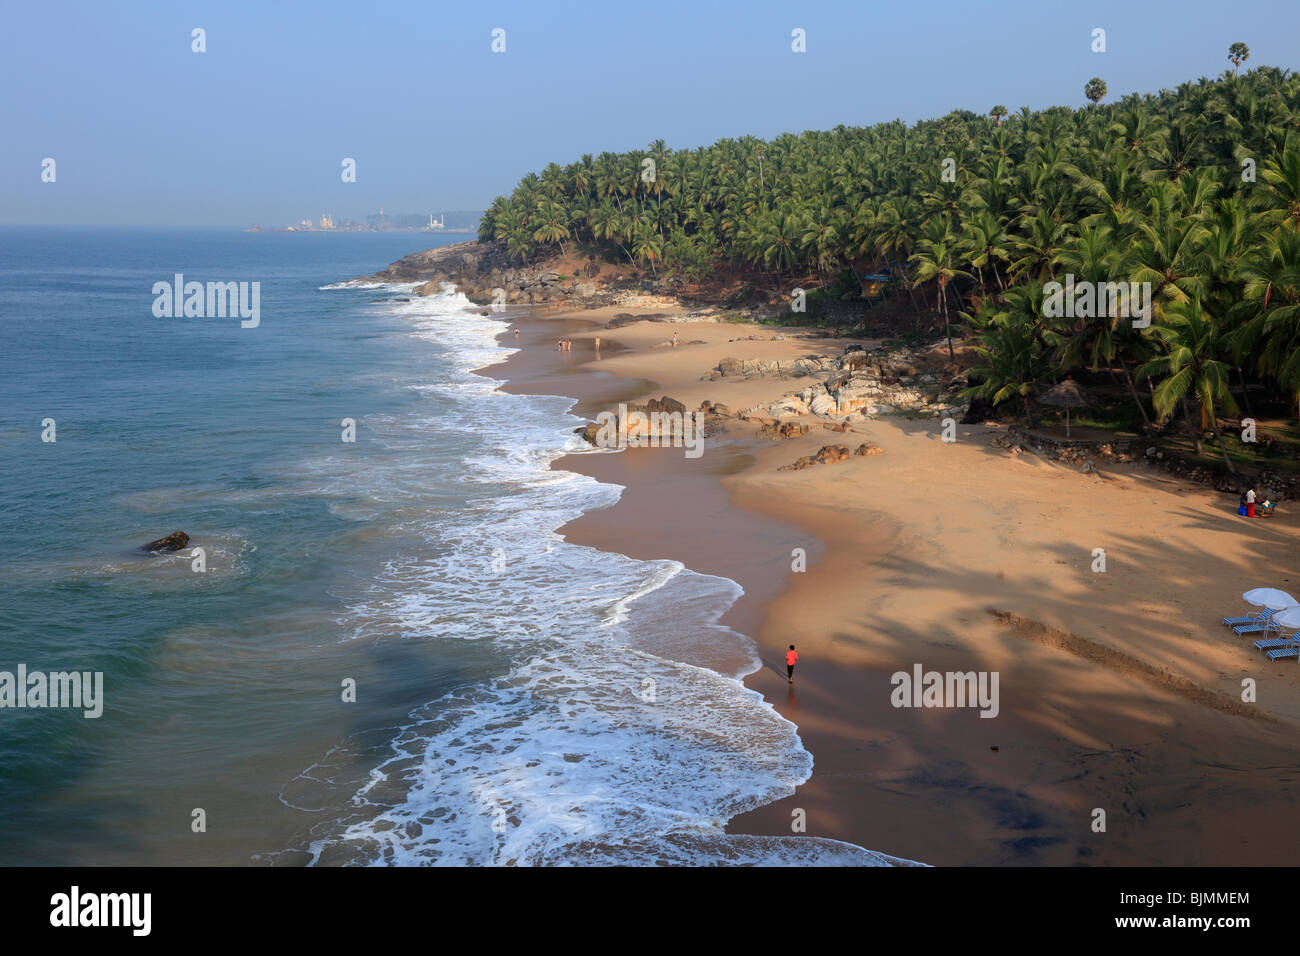 Playa de arena al sur de Vizhnijam, Malabarian costa Malabar, el estado de Kerala, India, Asia Foto de stock